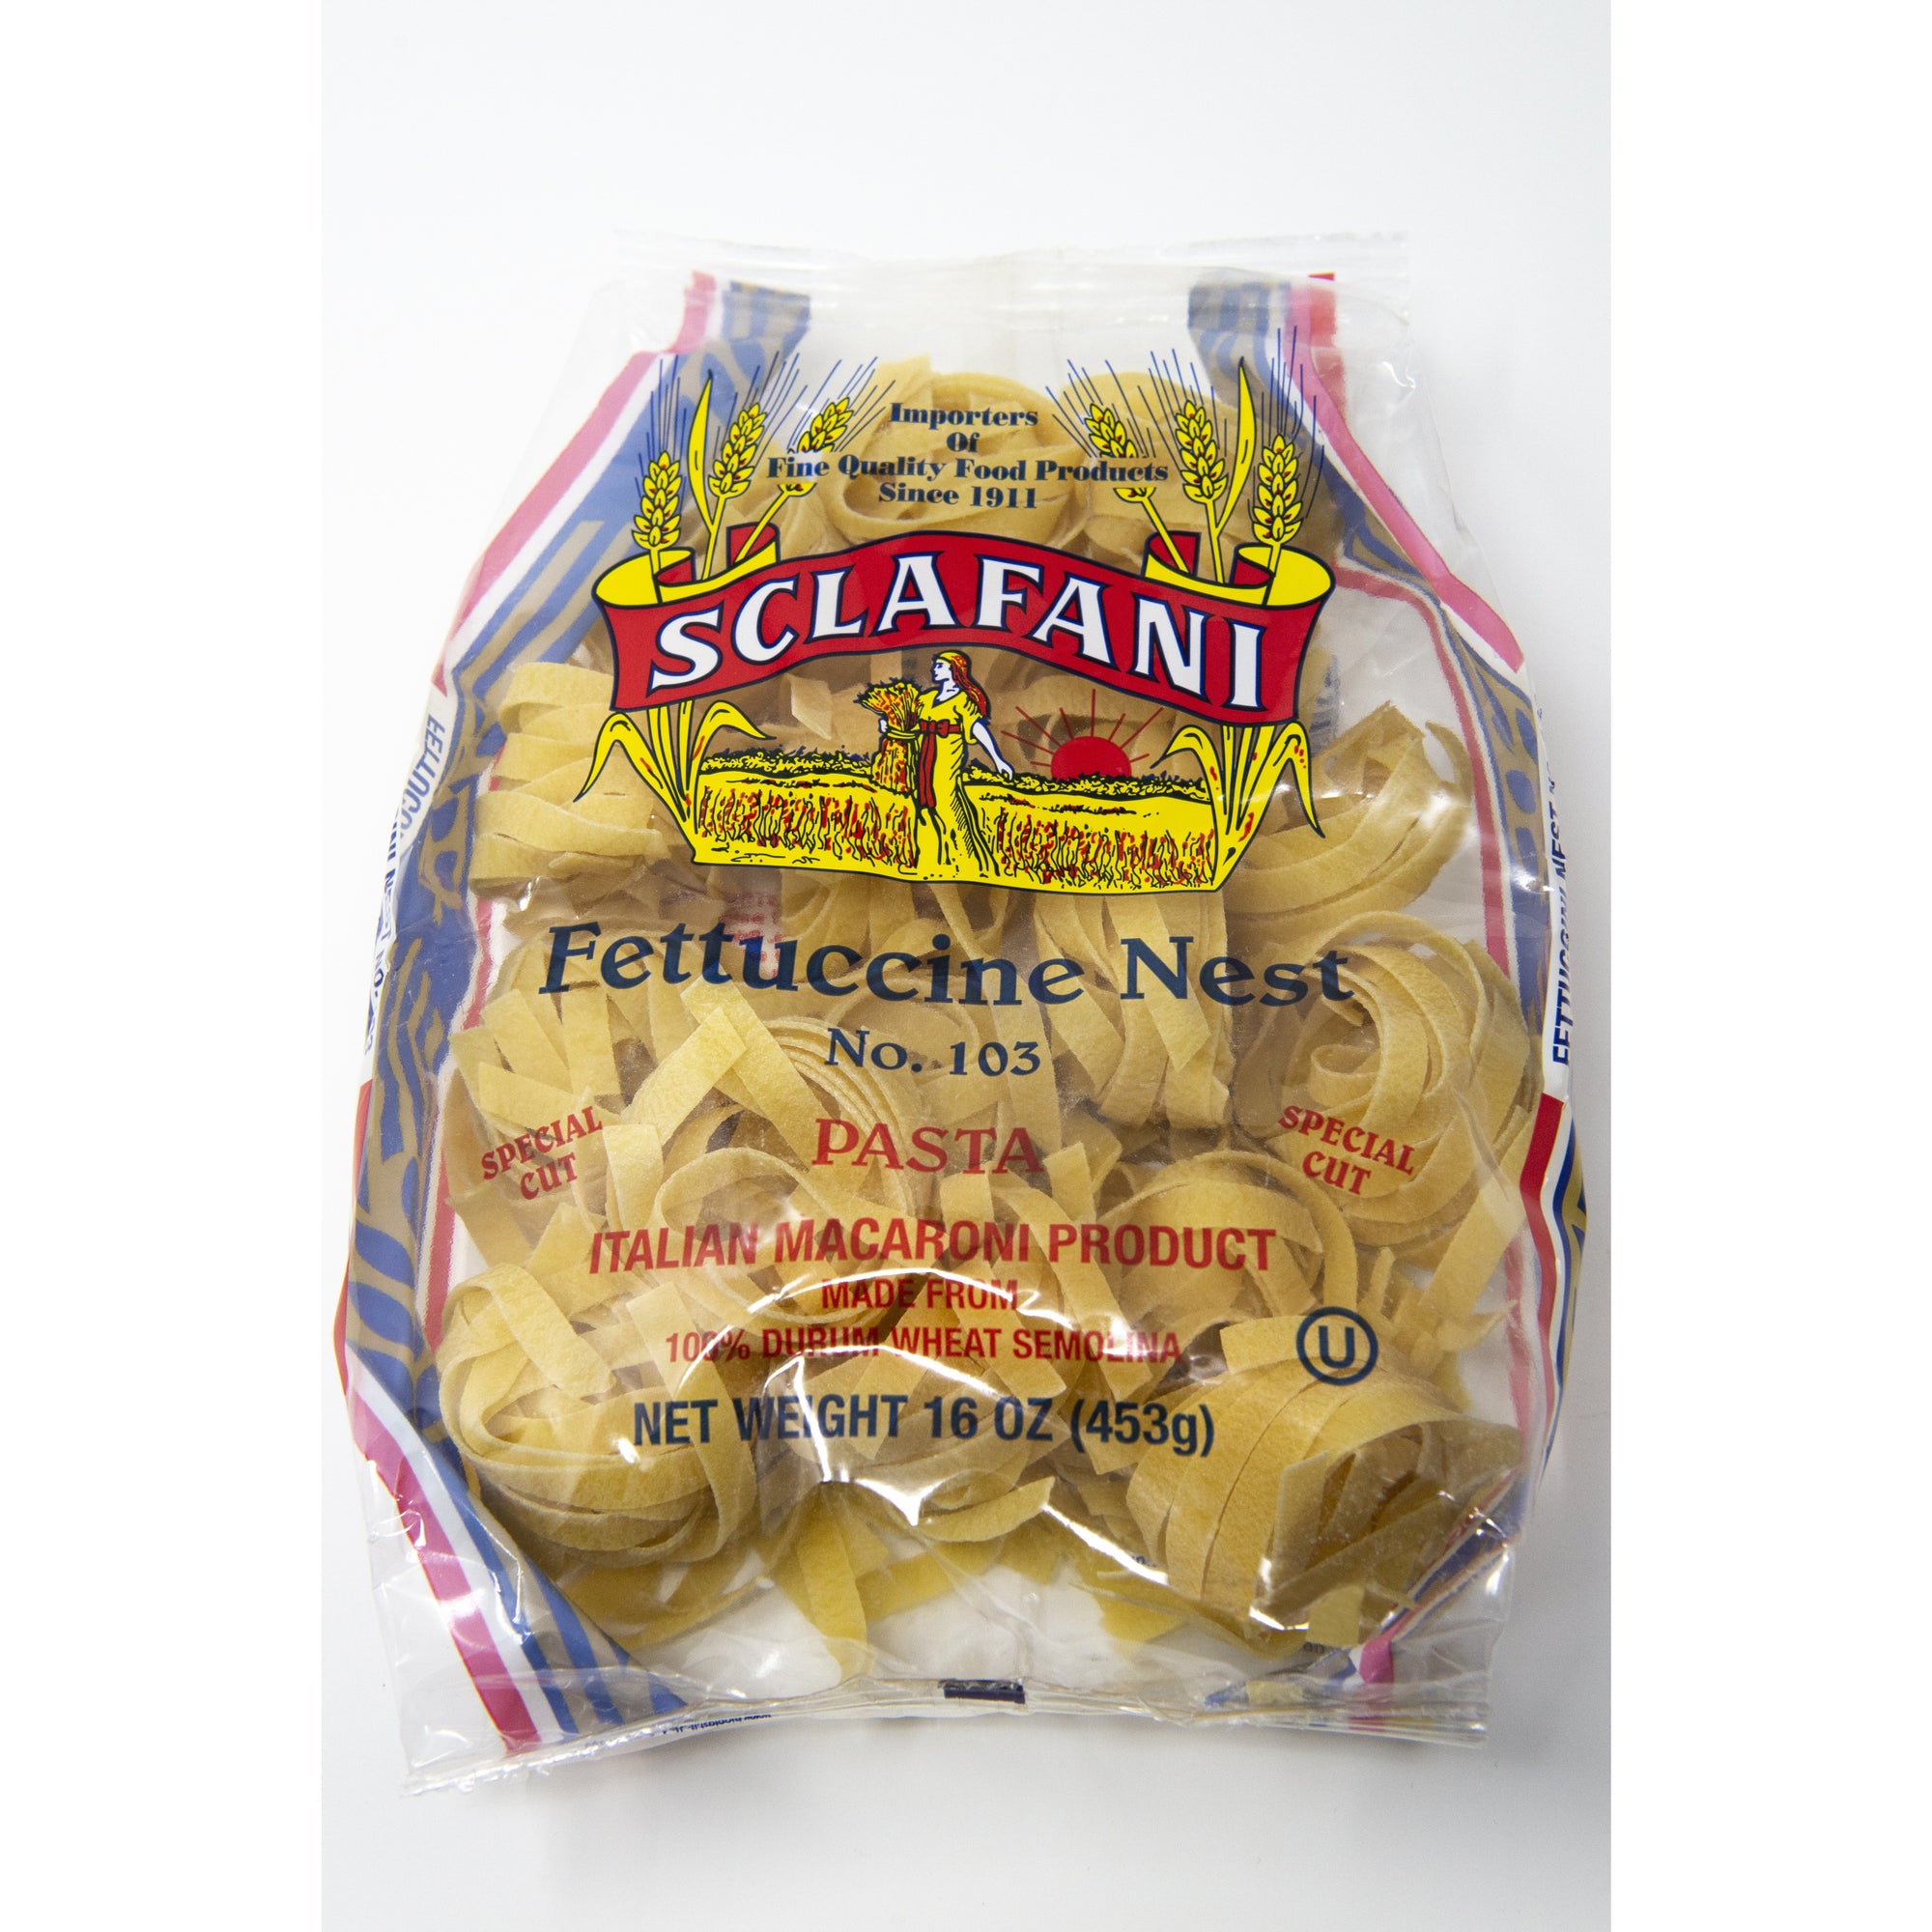 Sclafani Pasta #103 Fettuccine Nest 1 lb.